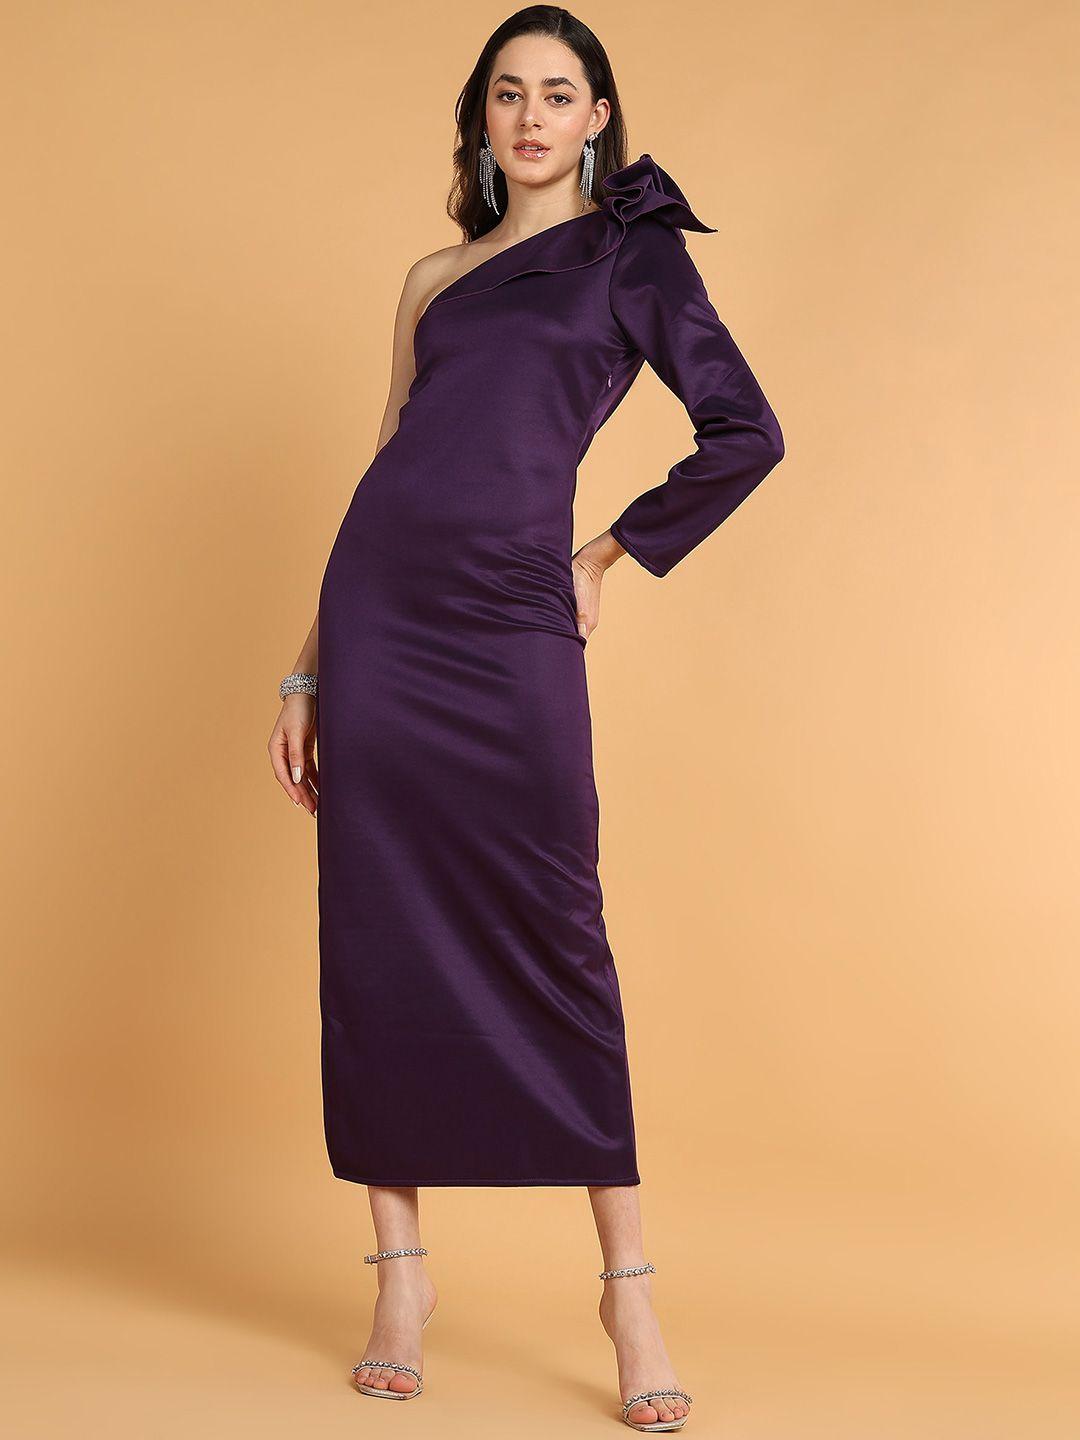 dodo & moa purple one shoulder ruffled sheath midi dress